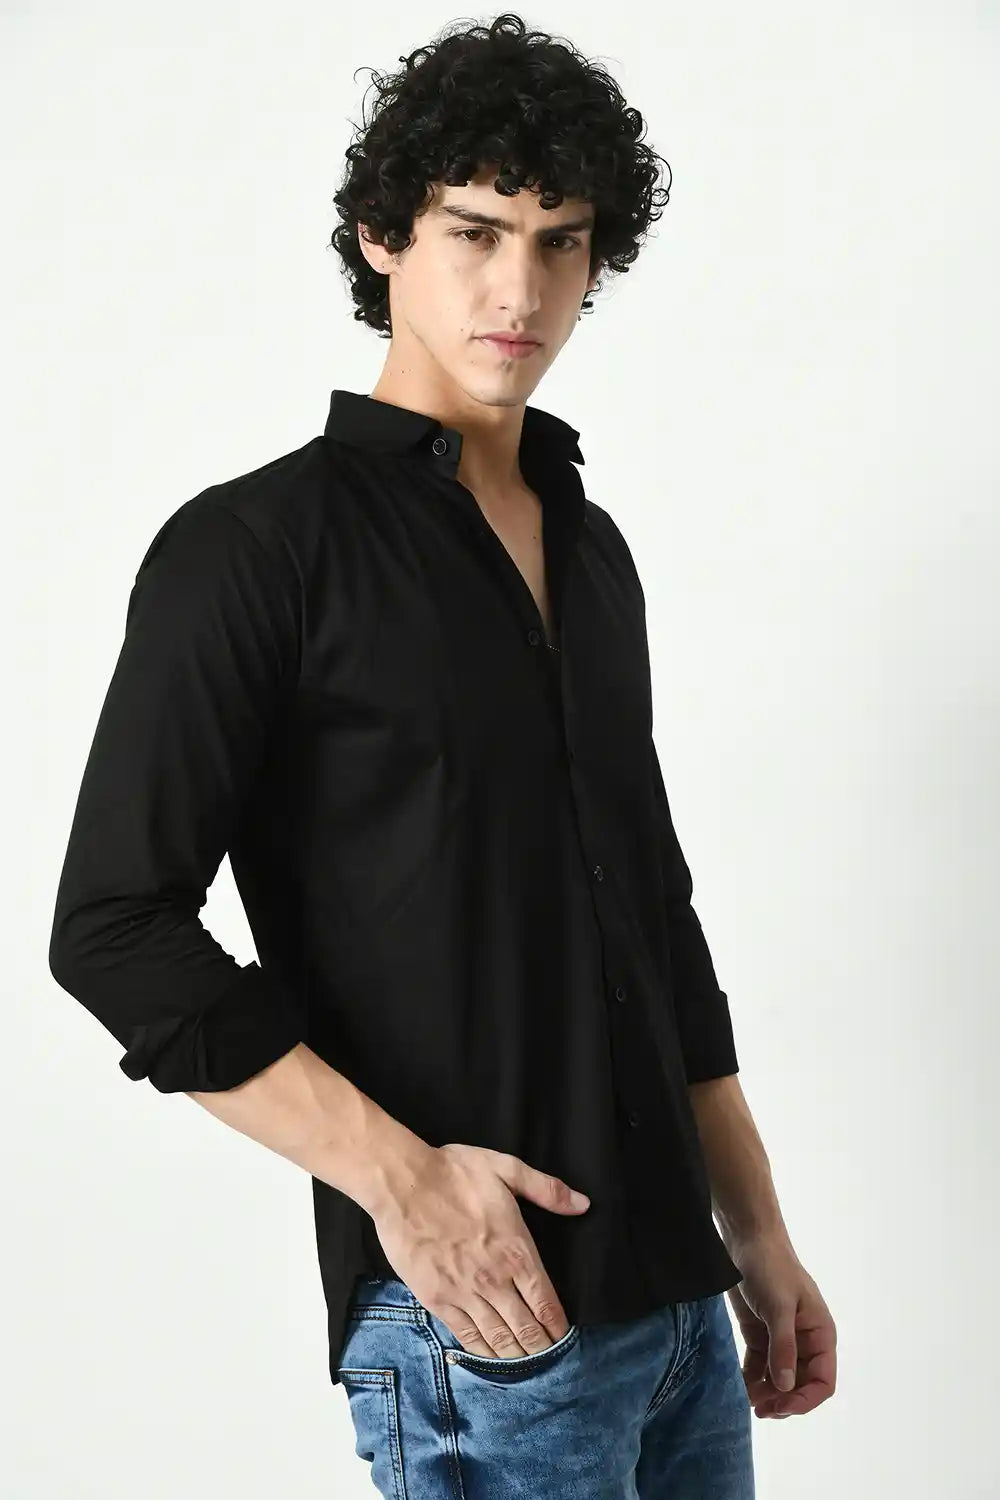 Black Satin Luxury Slim Fit Shirt